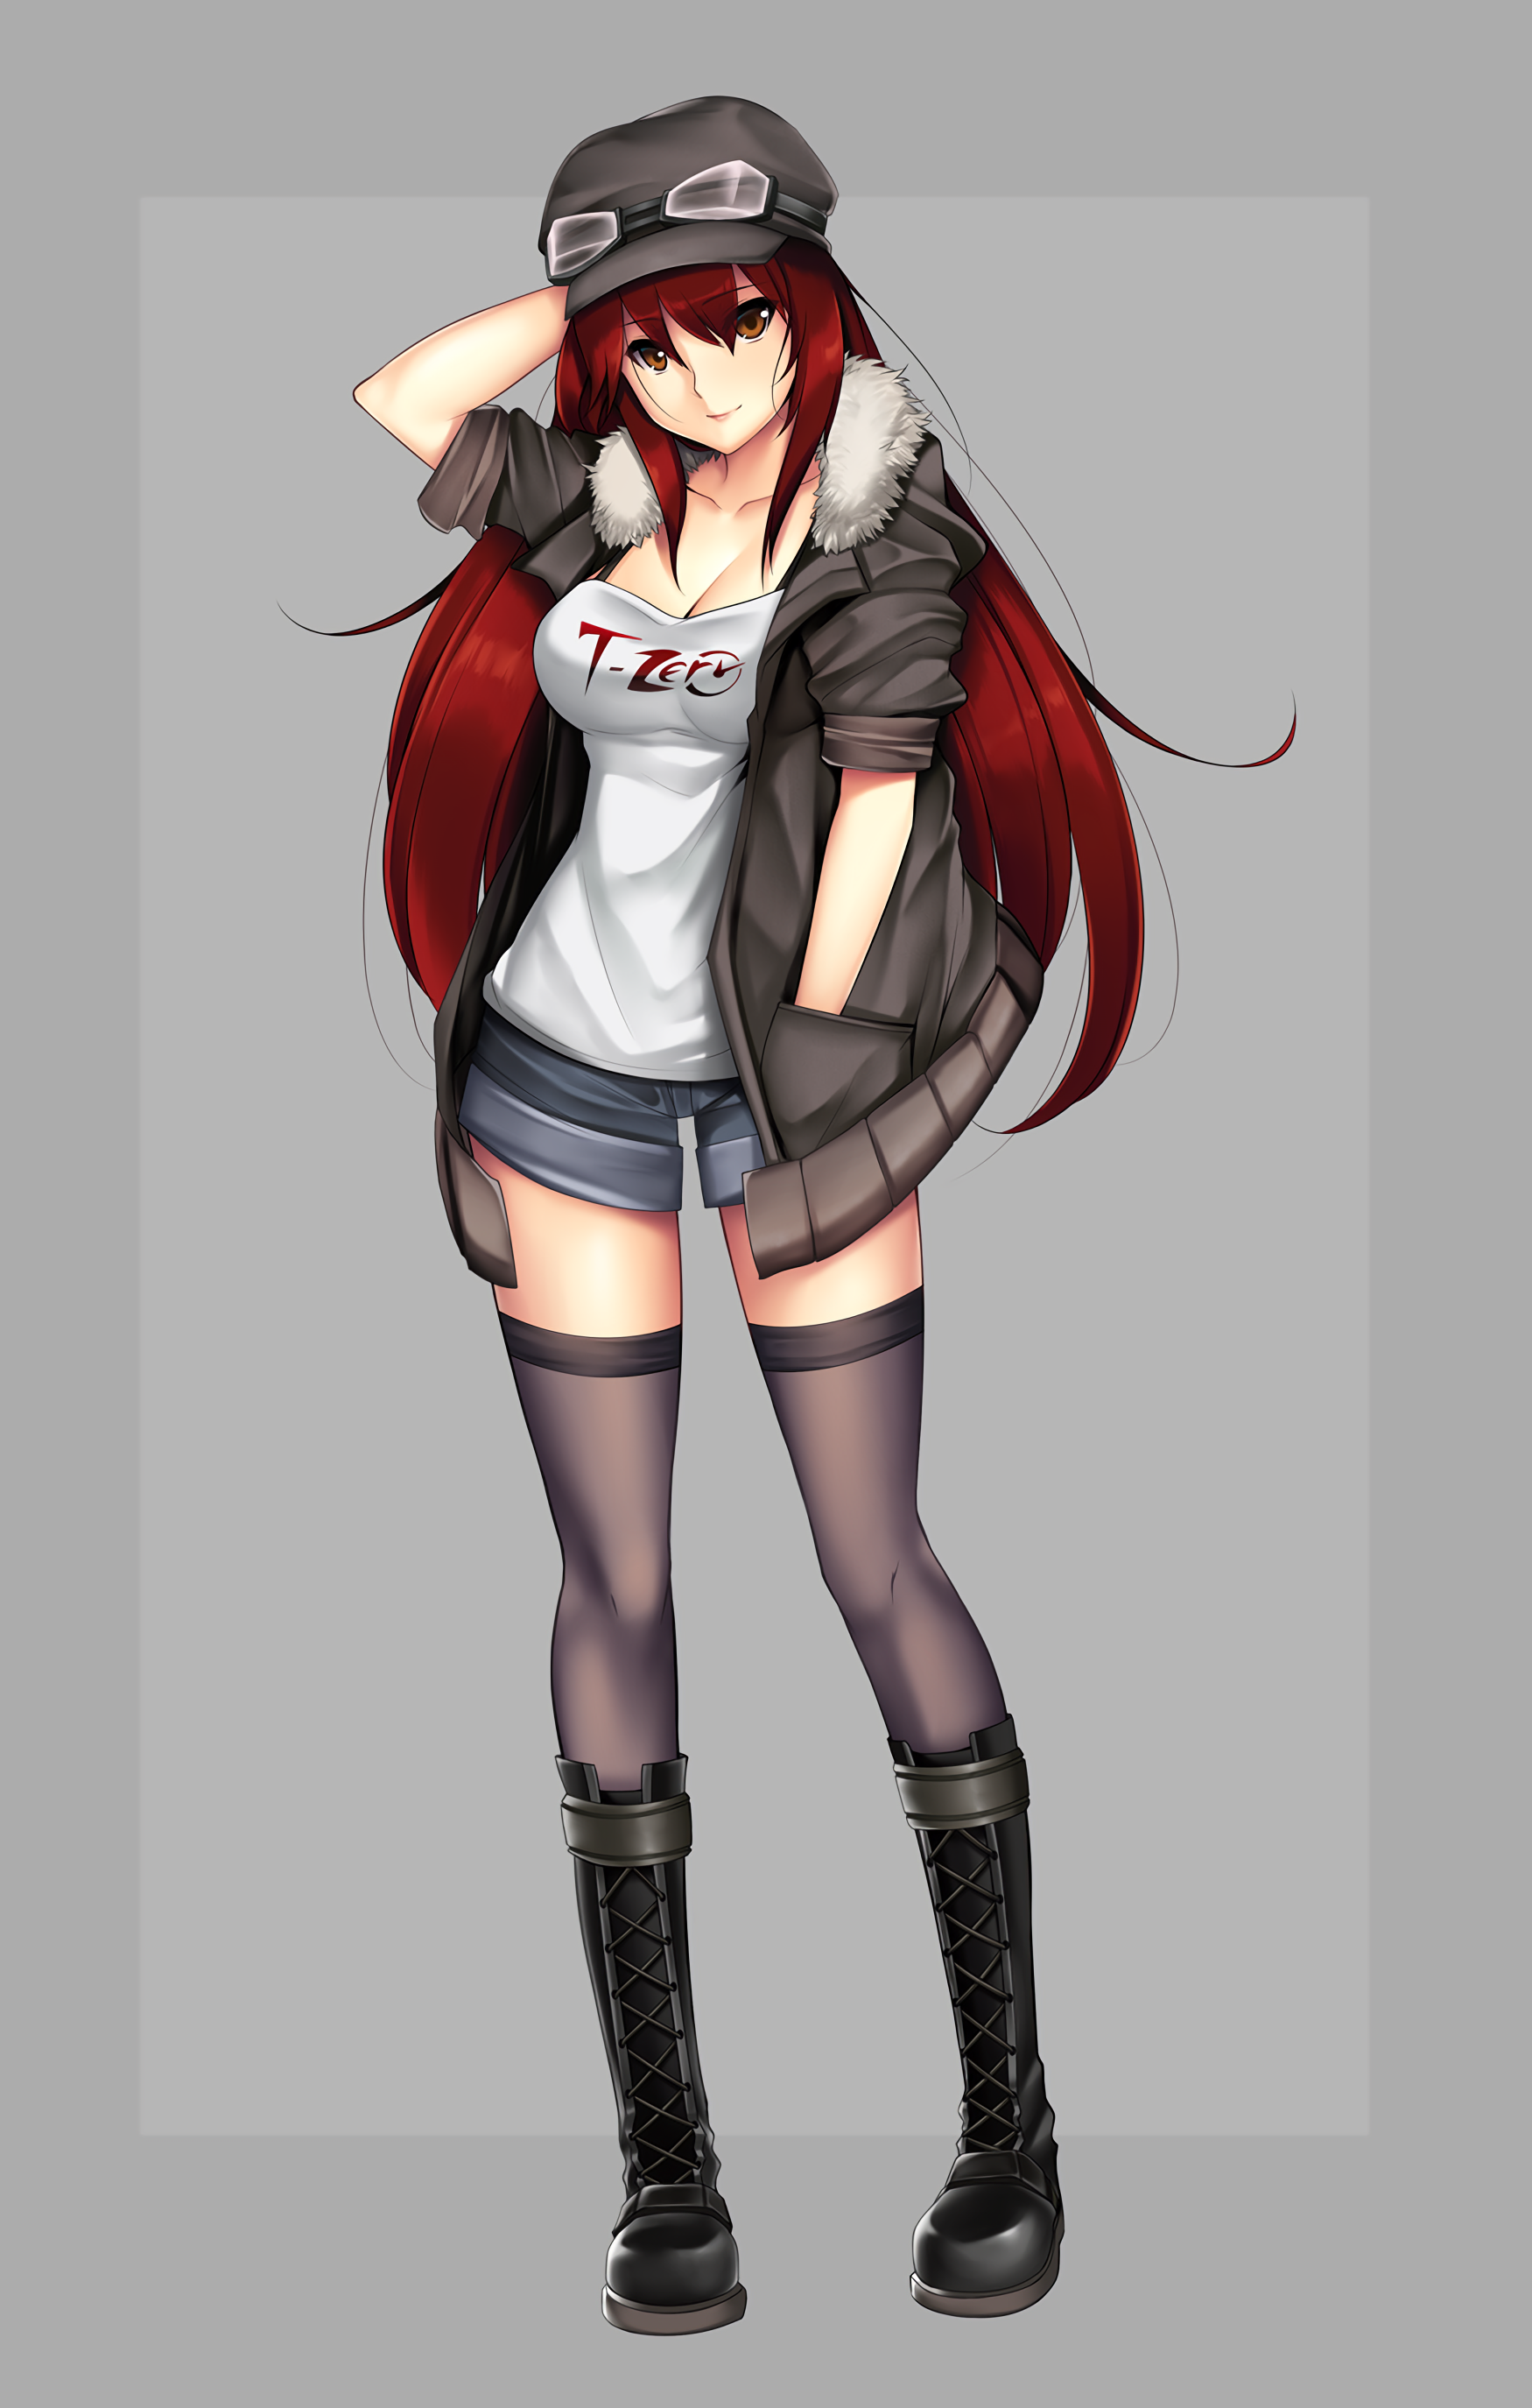 Anime 1750x2750 anime anime girls stockings shorts open shirt bra long hair redhead brown eyes hat